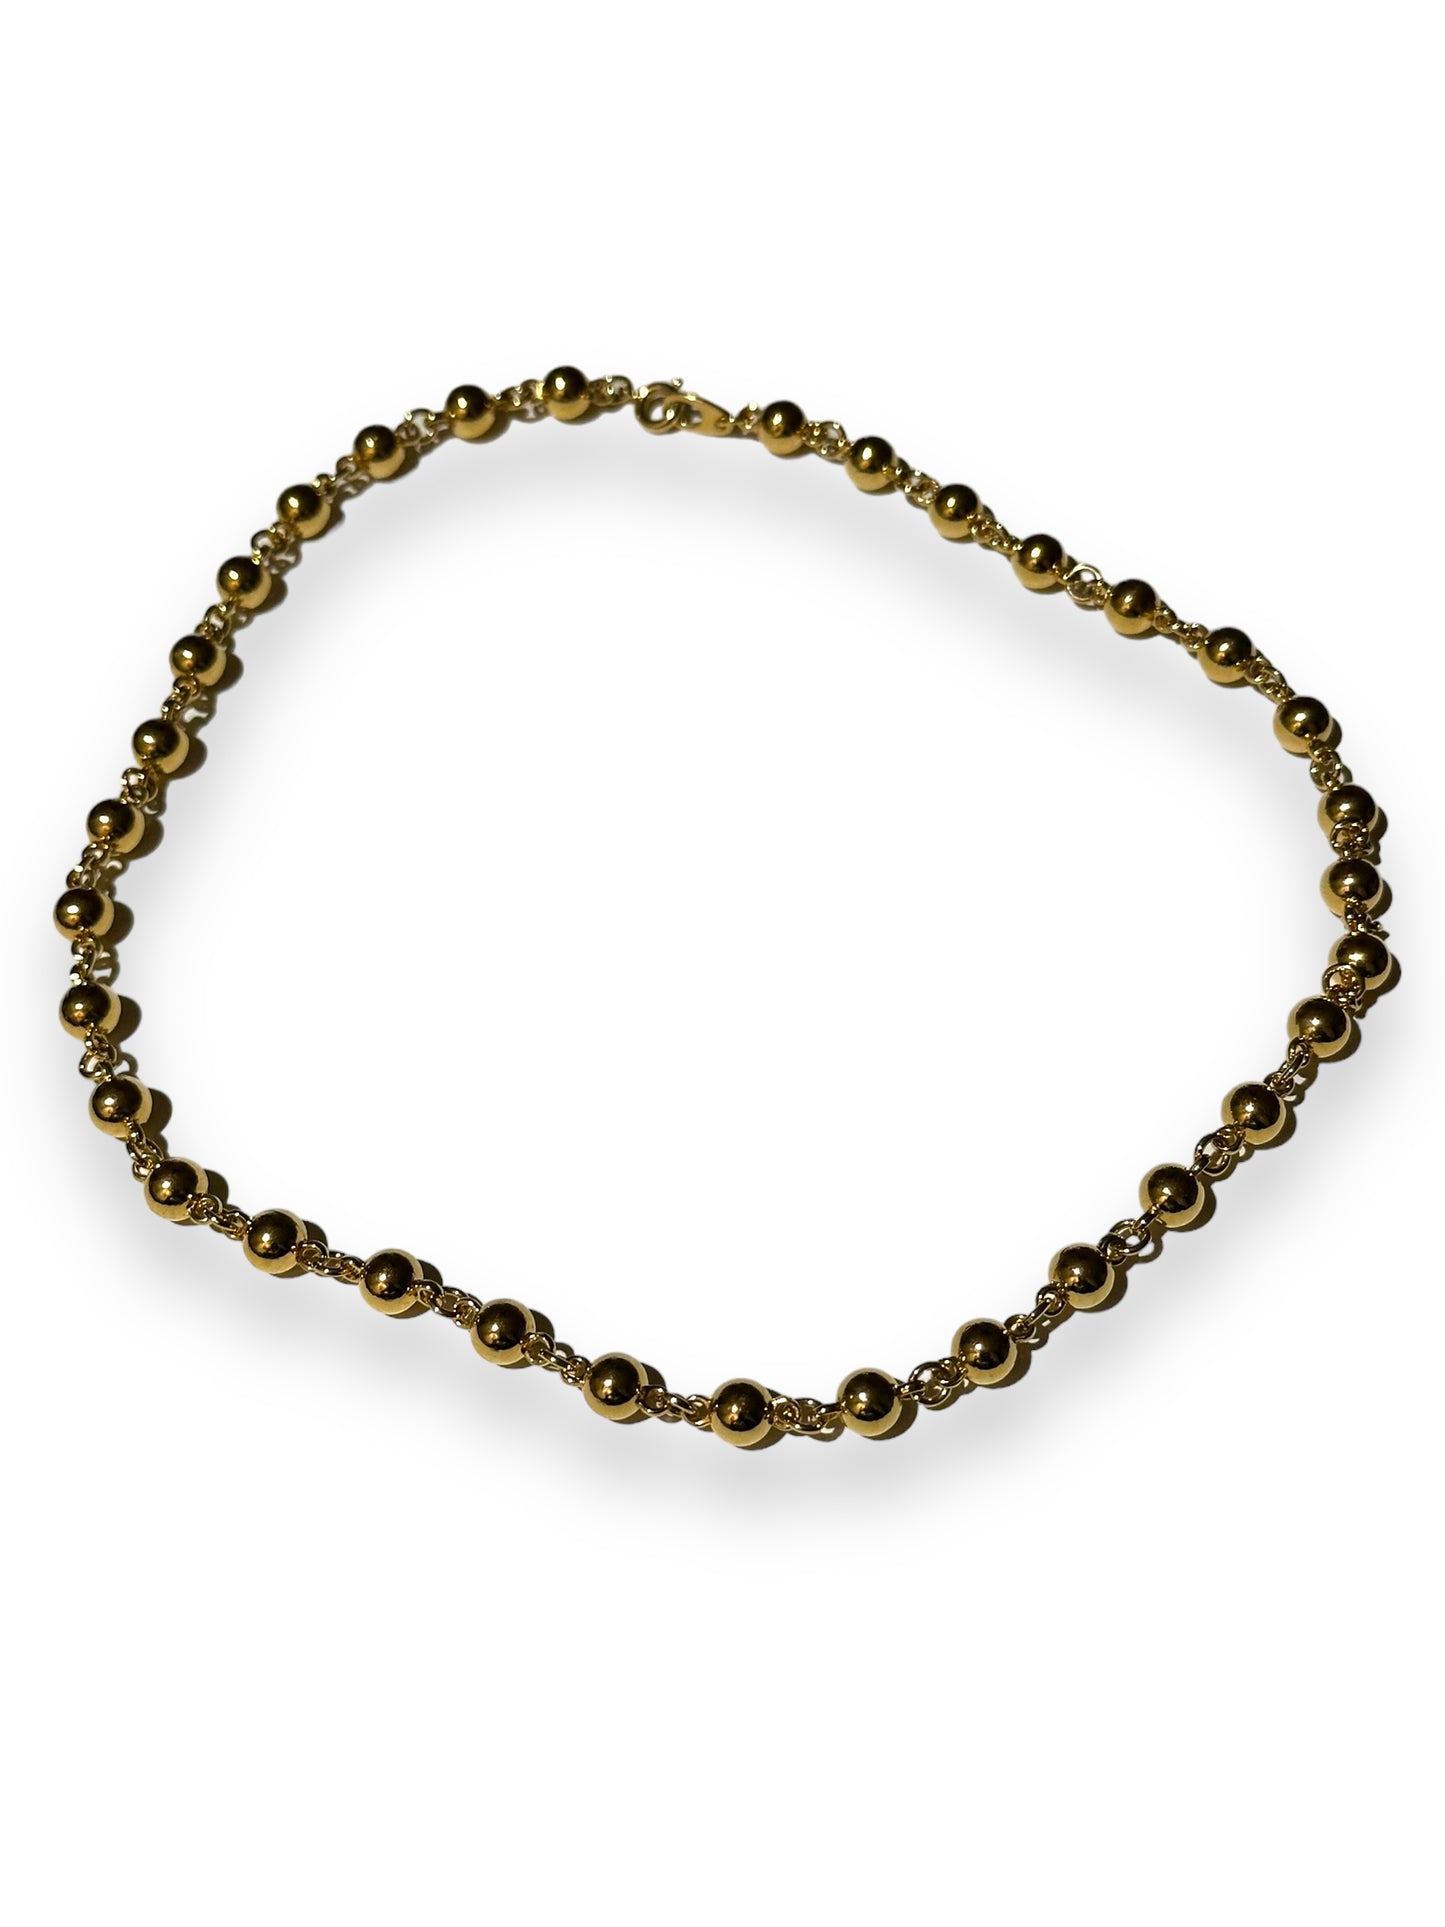 Vintage Gold Bead Link Necklace (Unsigned)